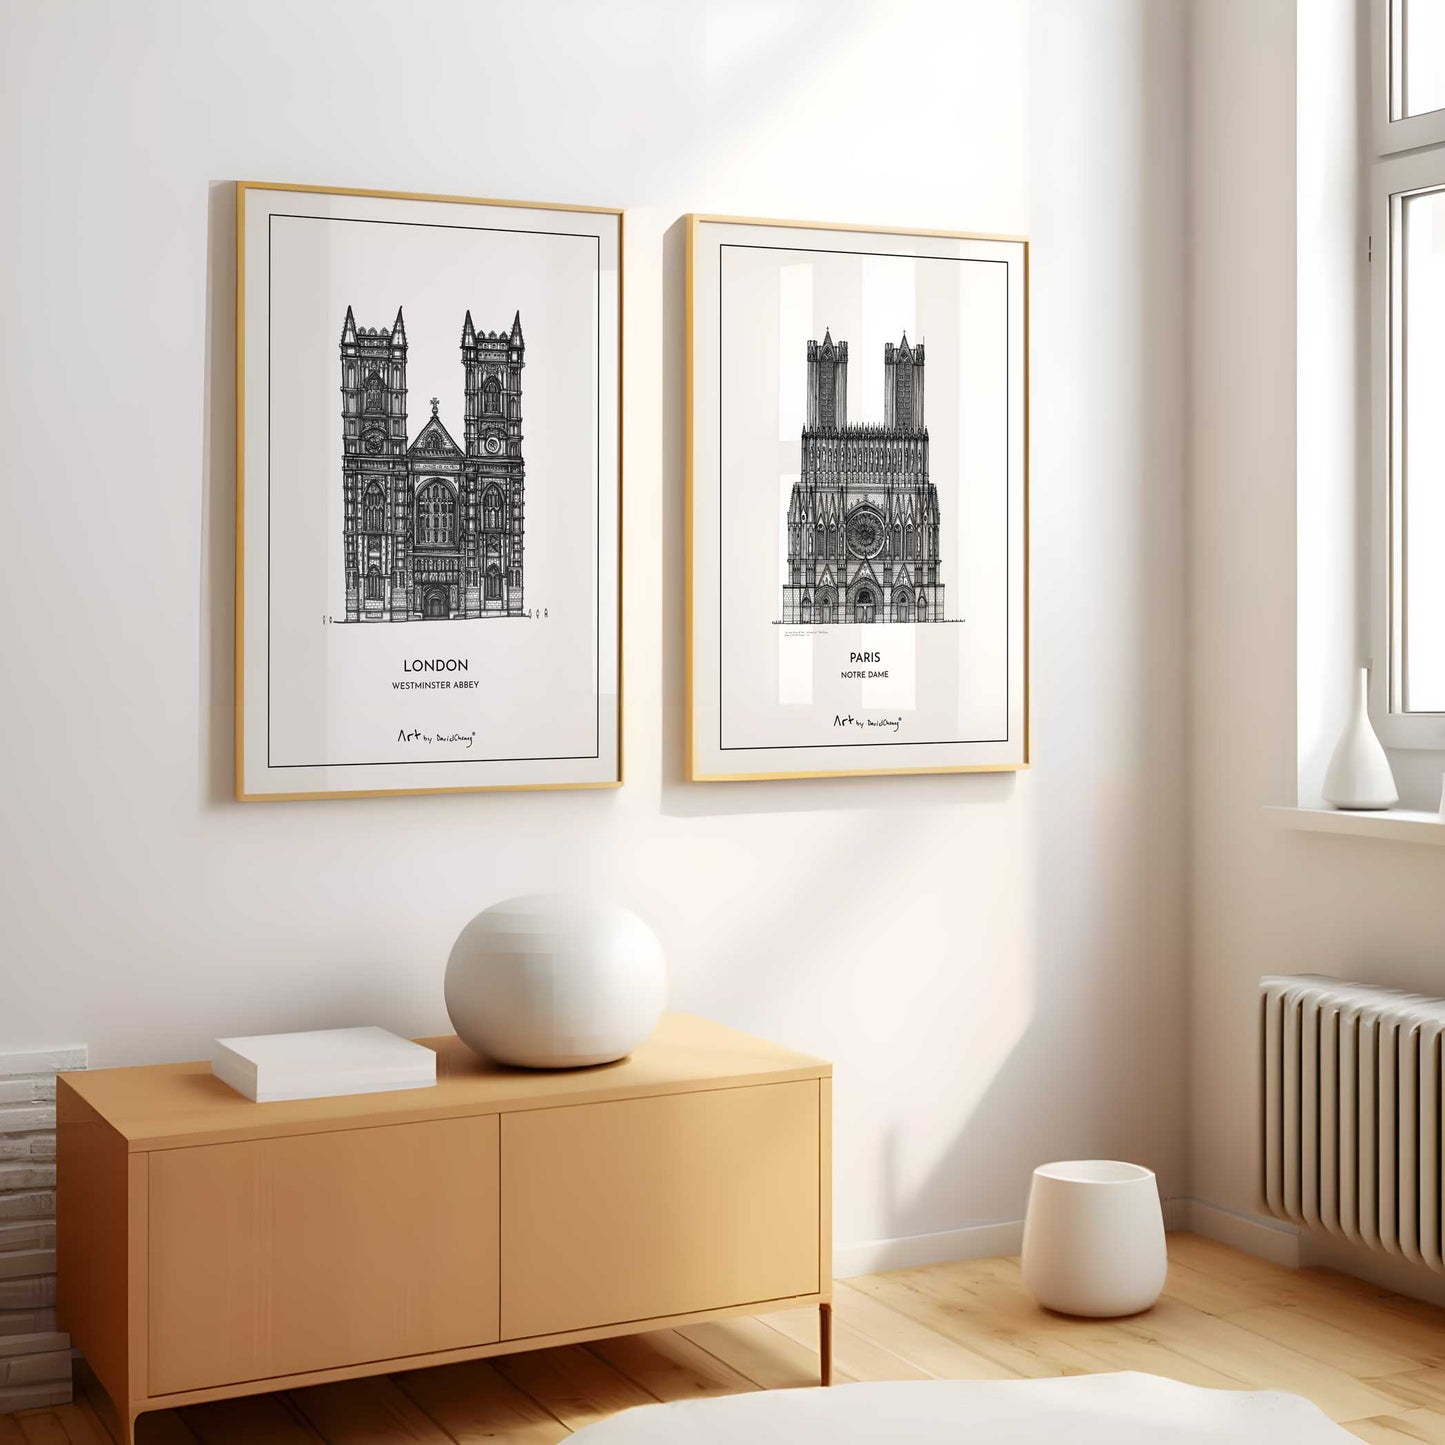 Art print "London Westminster Abbey"